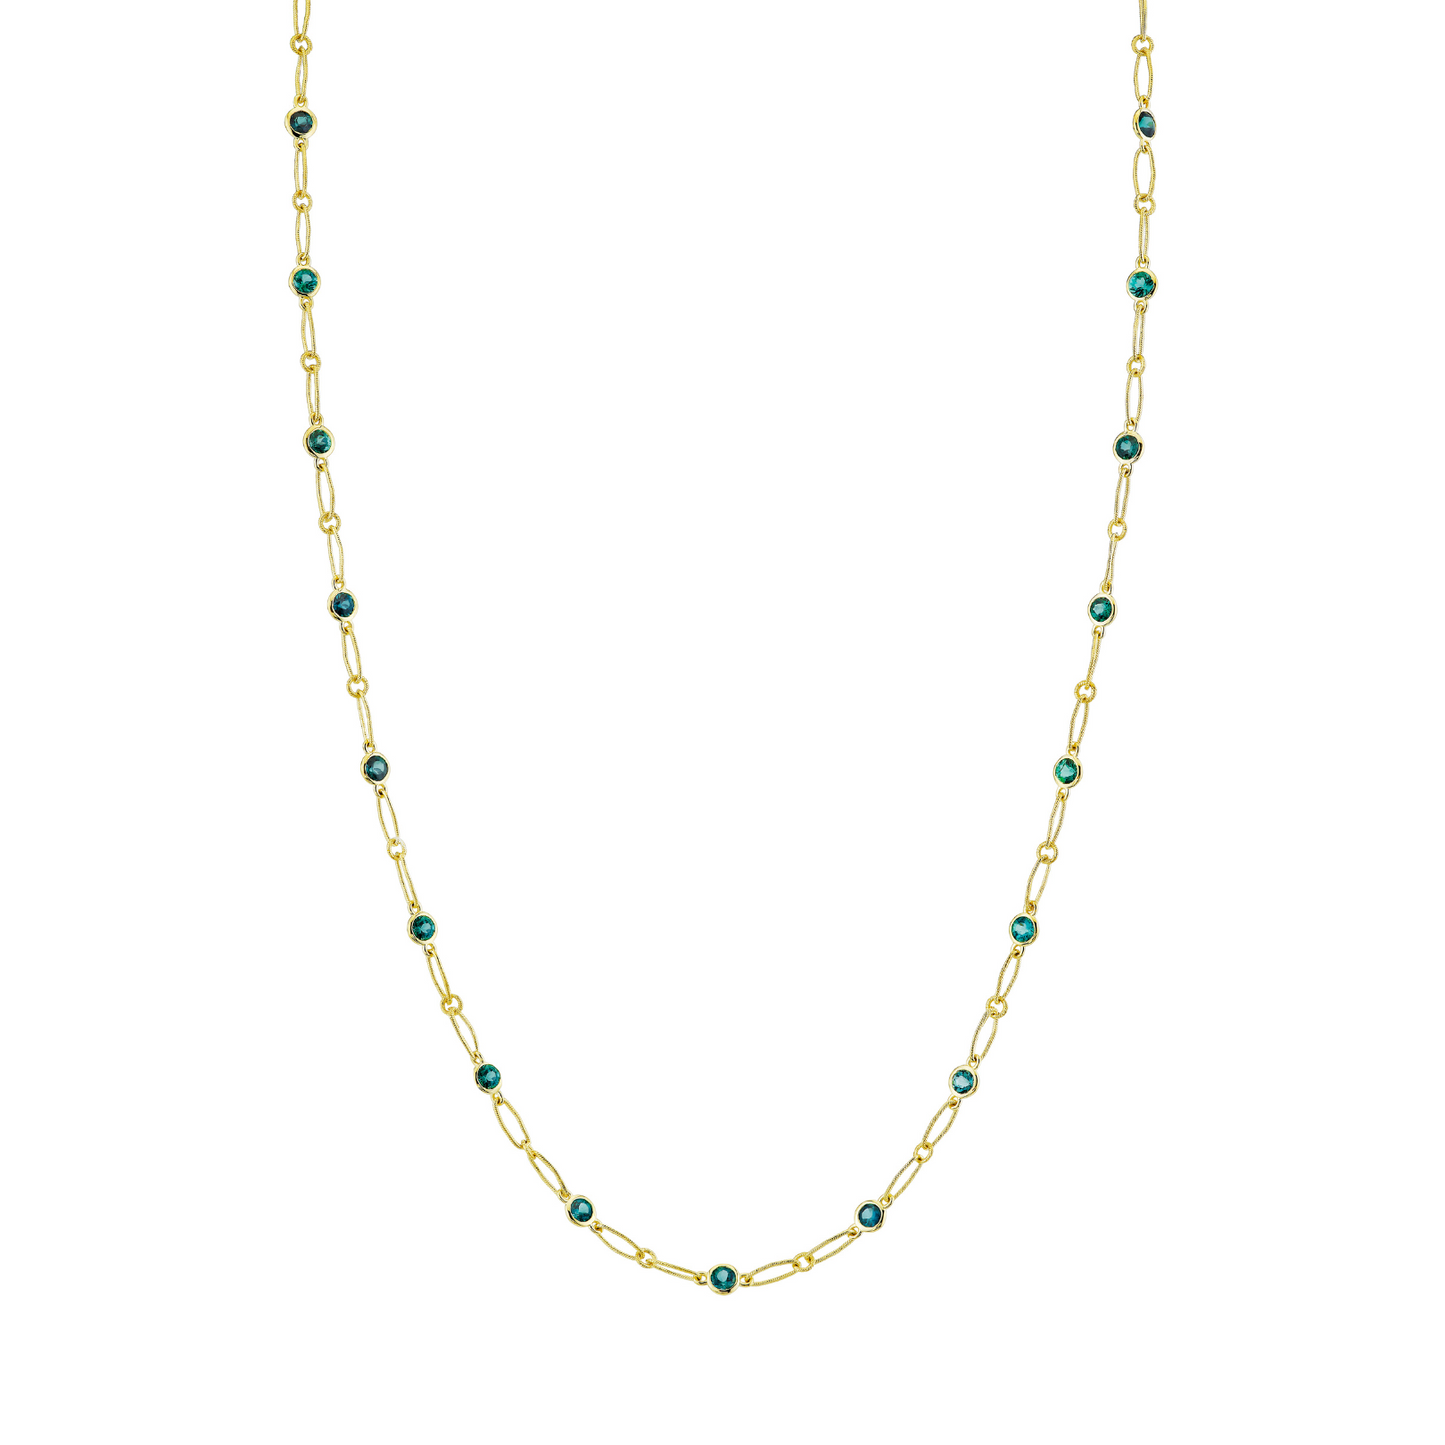 Sloane Street blue green tourmaline necklace